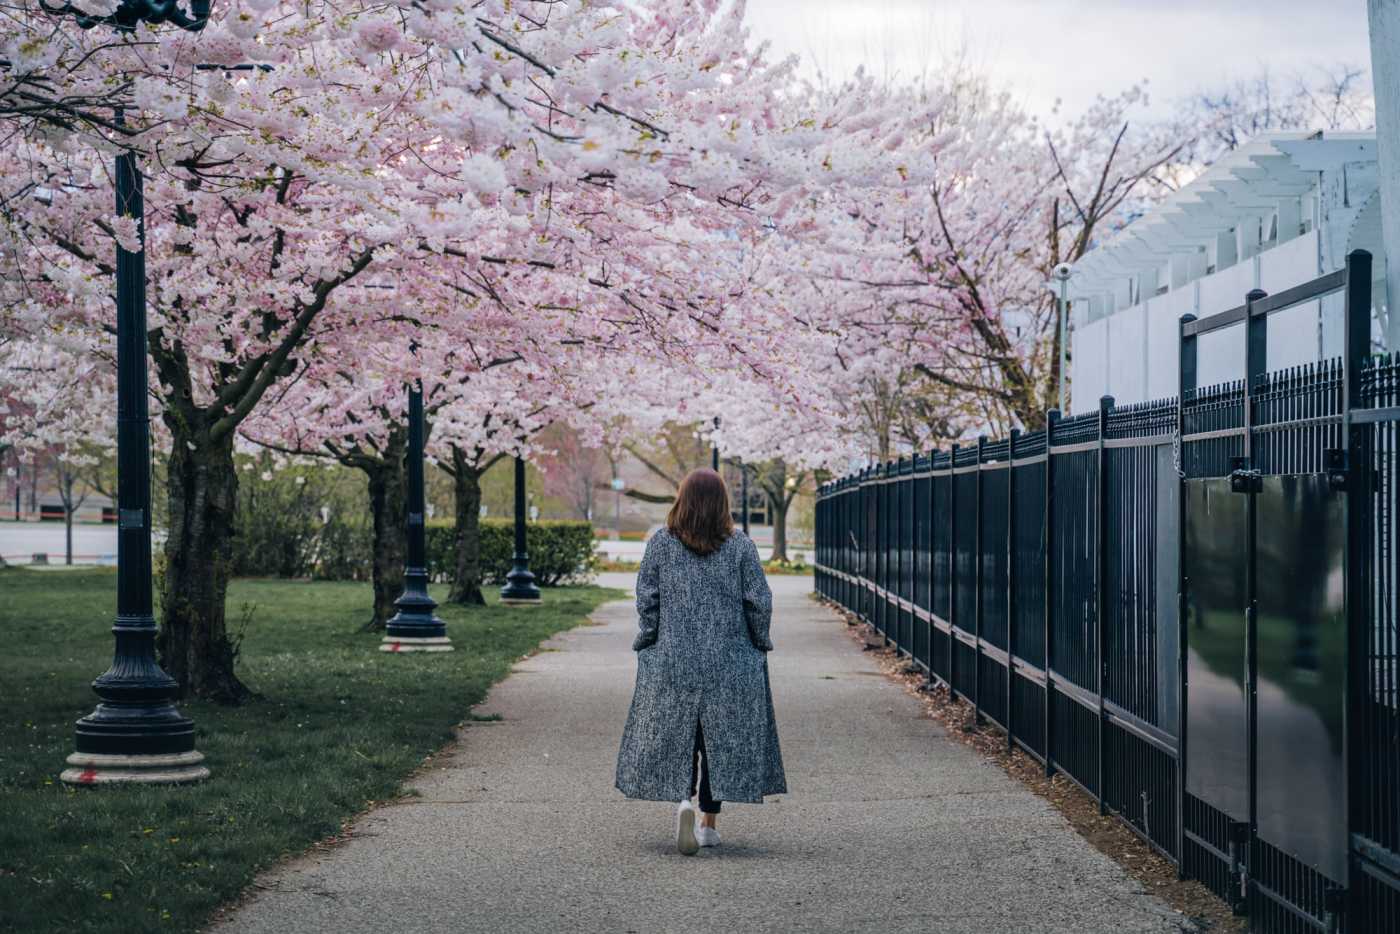 Photo credit: https://www.destinationtoronto.com/leisure-blog/post/cherry-blossoms/